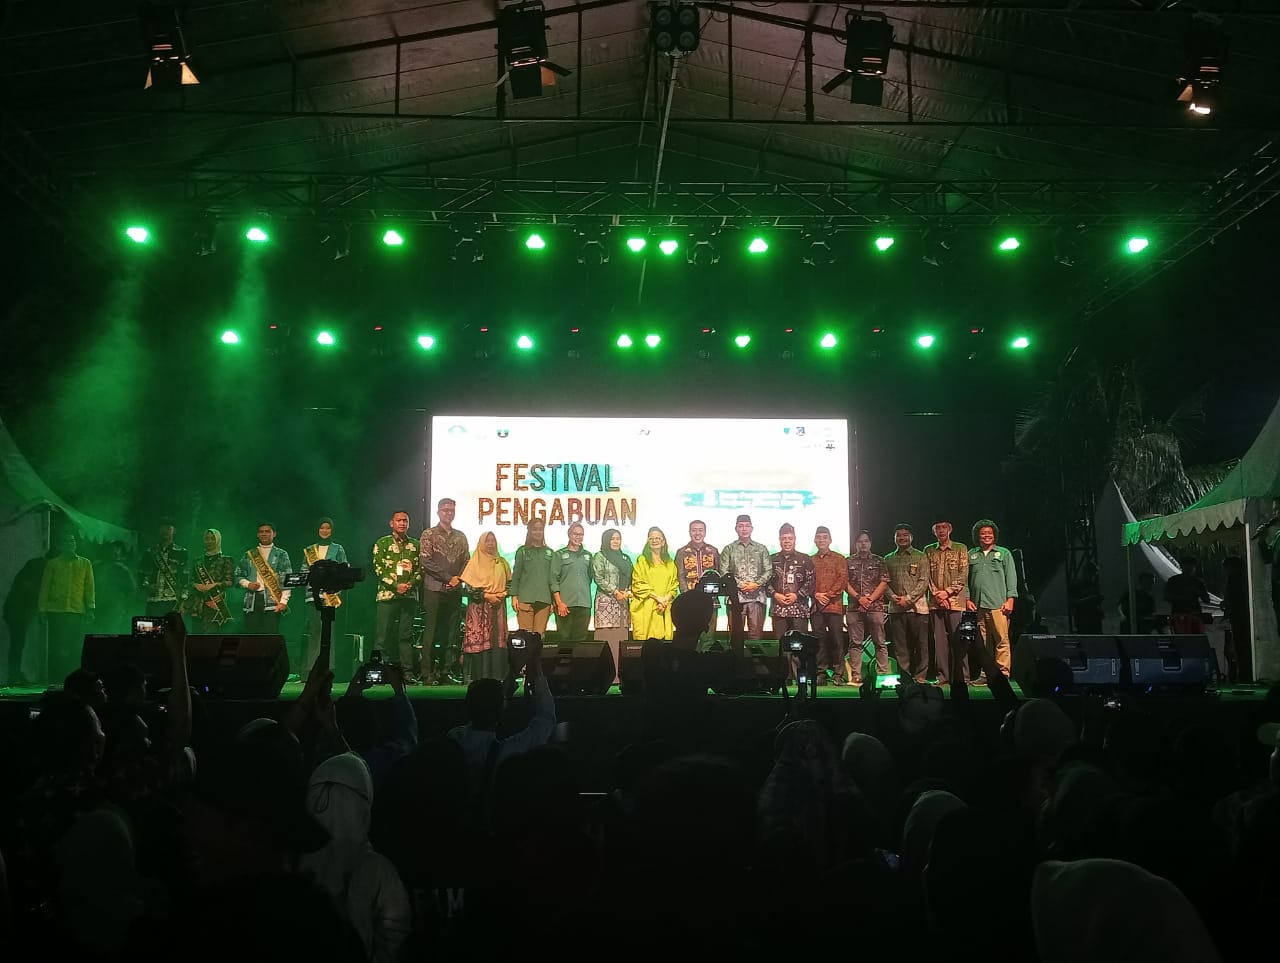 Hairan : Festival Pengabuan Mampu Mendongkrak Kepariwisataan dan Kebudayaan Kabupaten Tanjab Barat